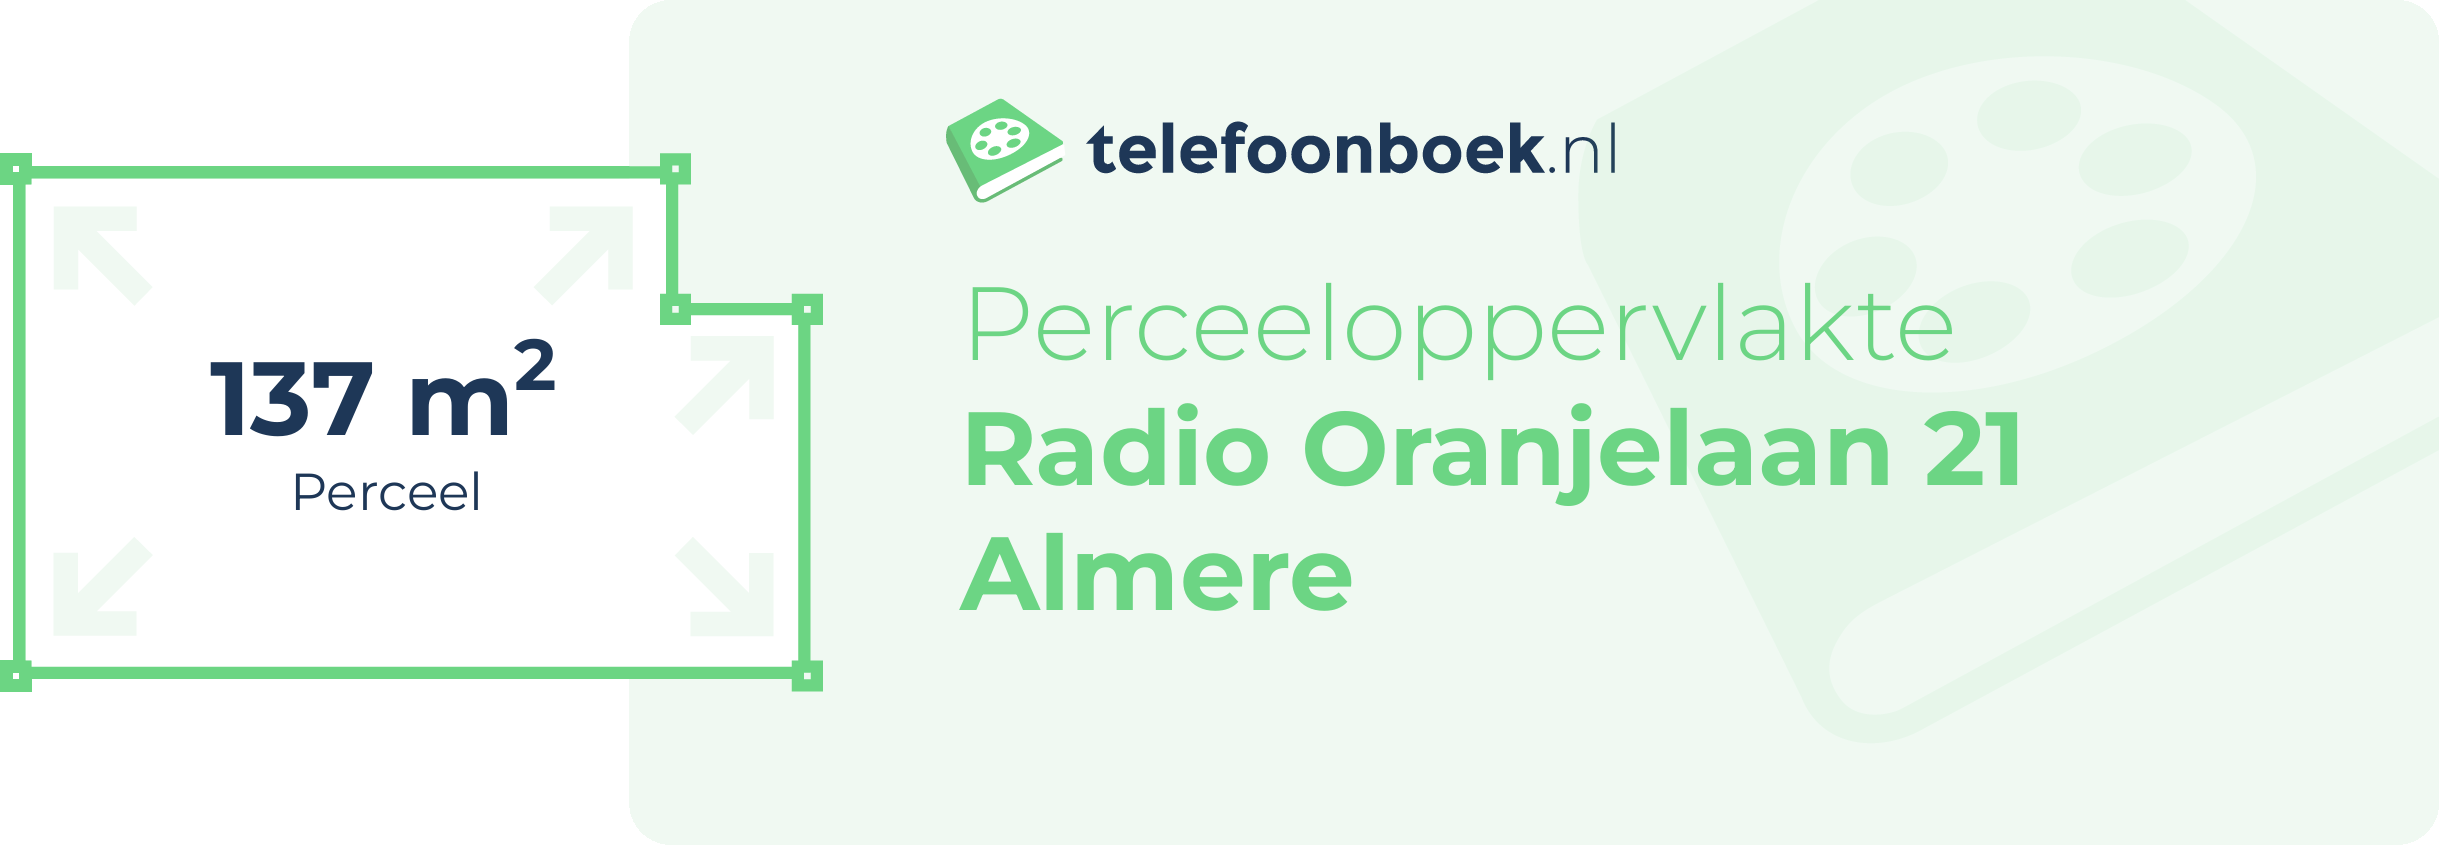 Perceeloppervlakte Radio Oranjelaan 21 Almere